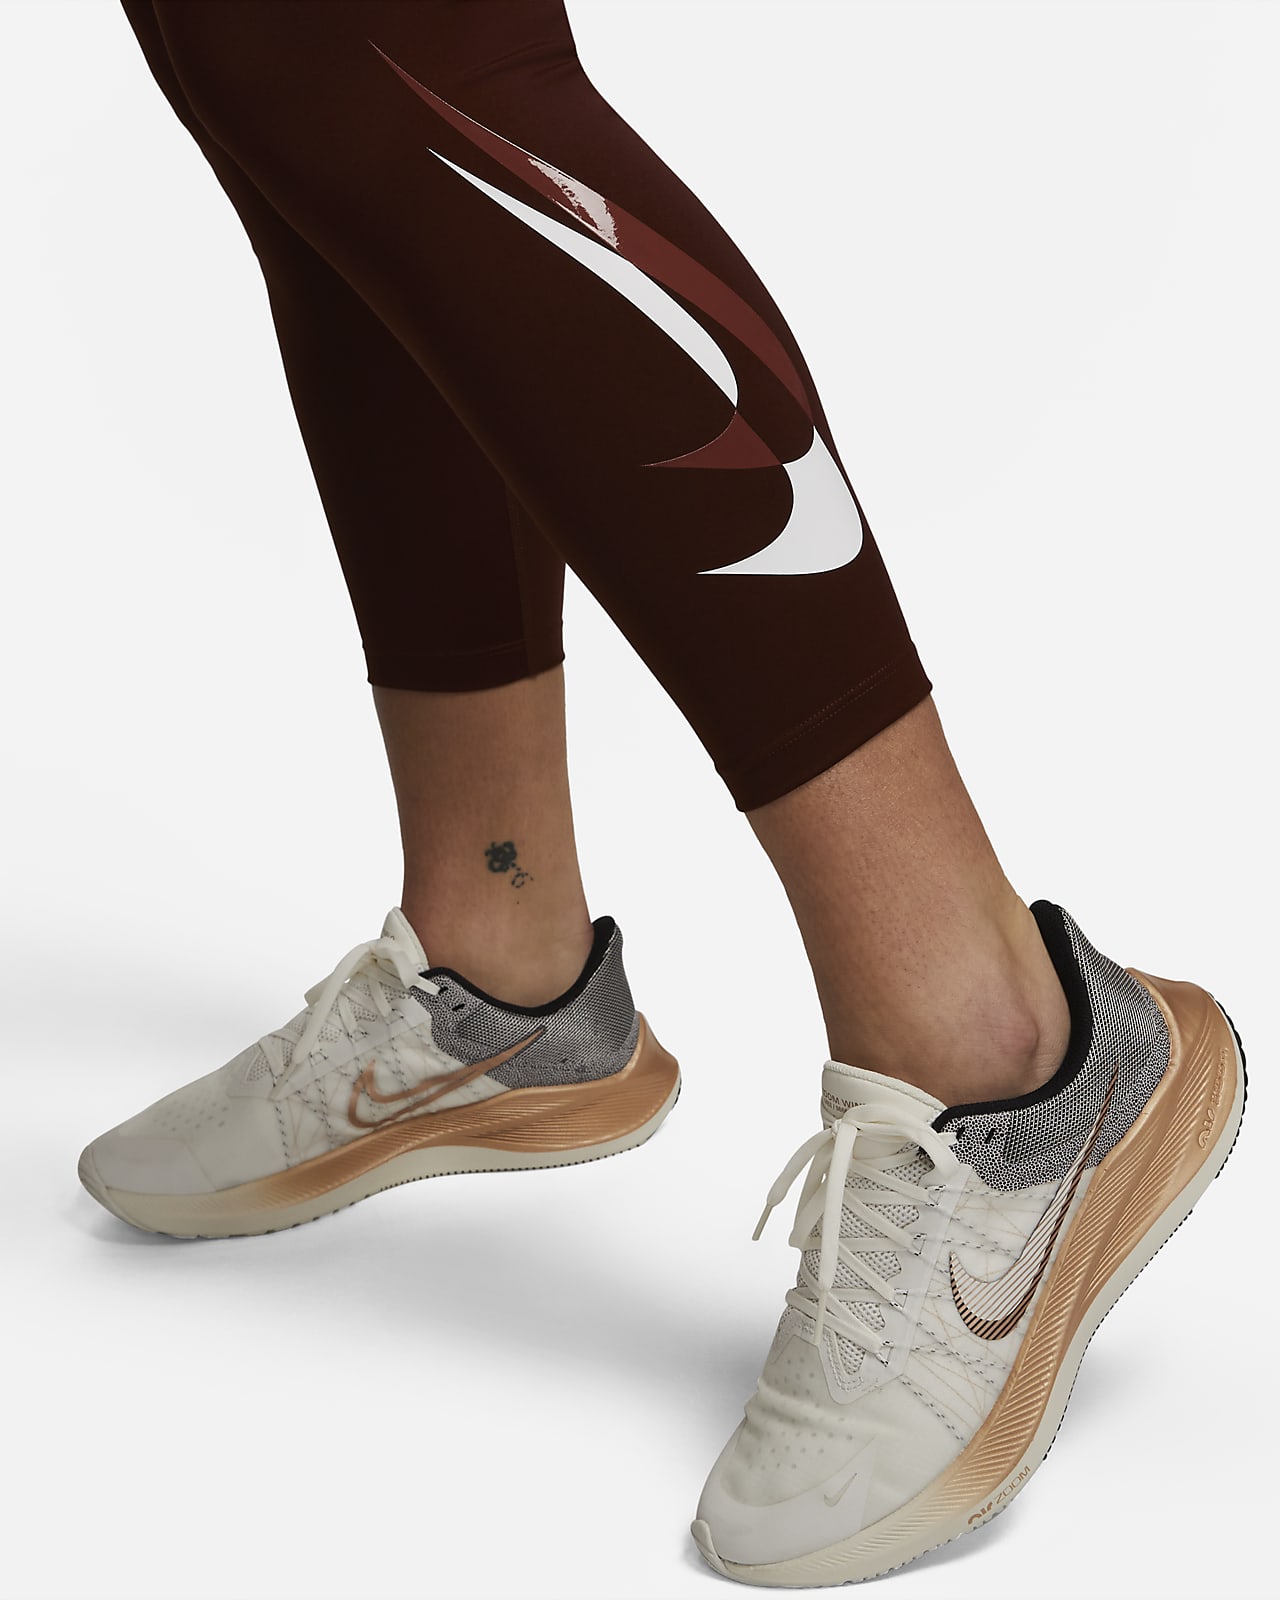 Nike Swoosh Run Women's 7/8-Length Mid-Rise Running Leggings. Nike MY